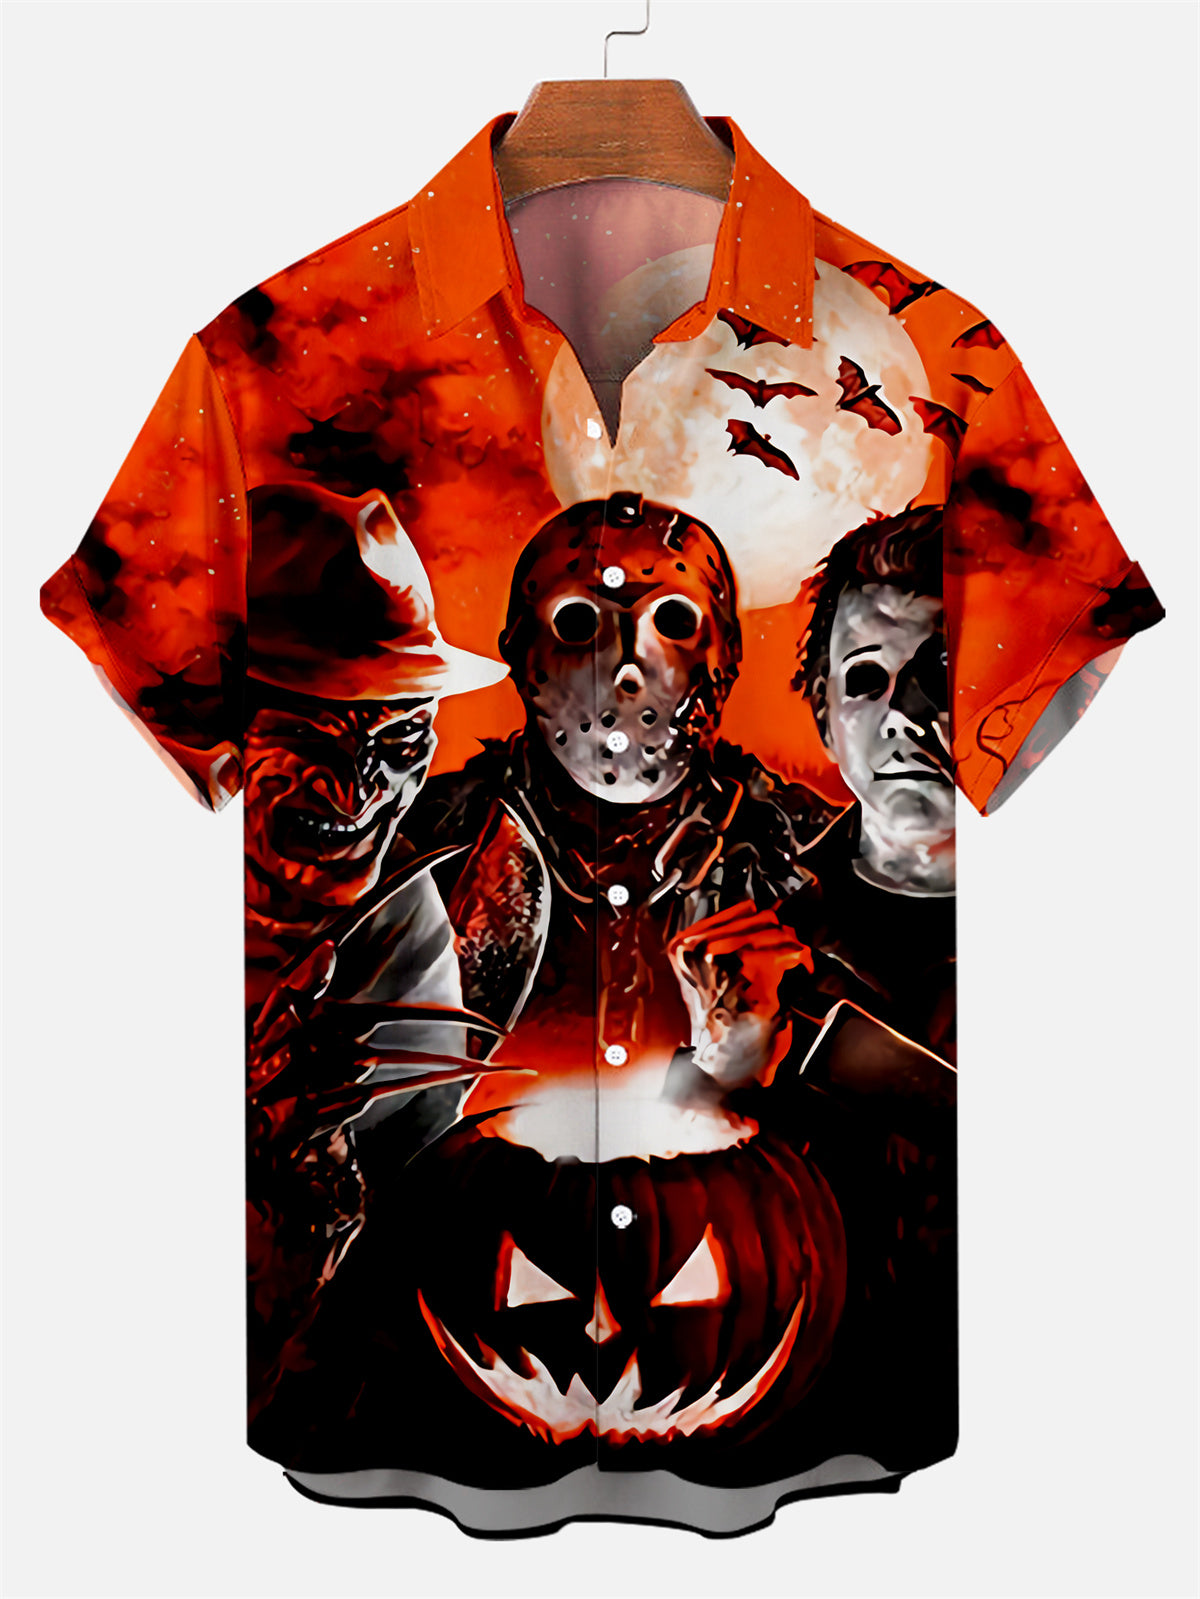 Night of Terror Men's Plus Size Shirt